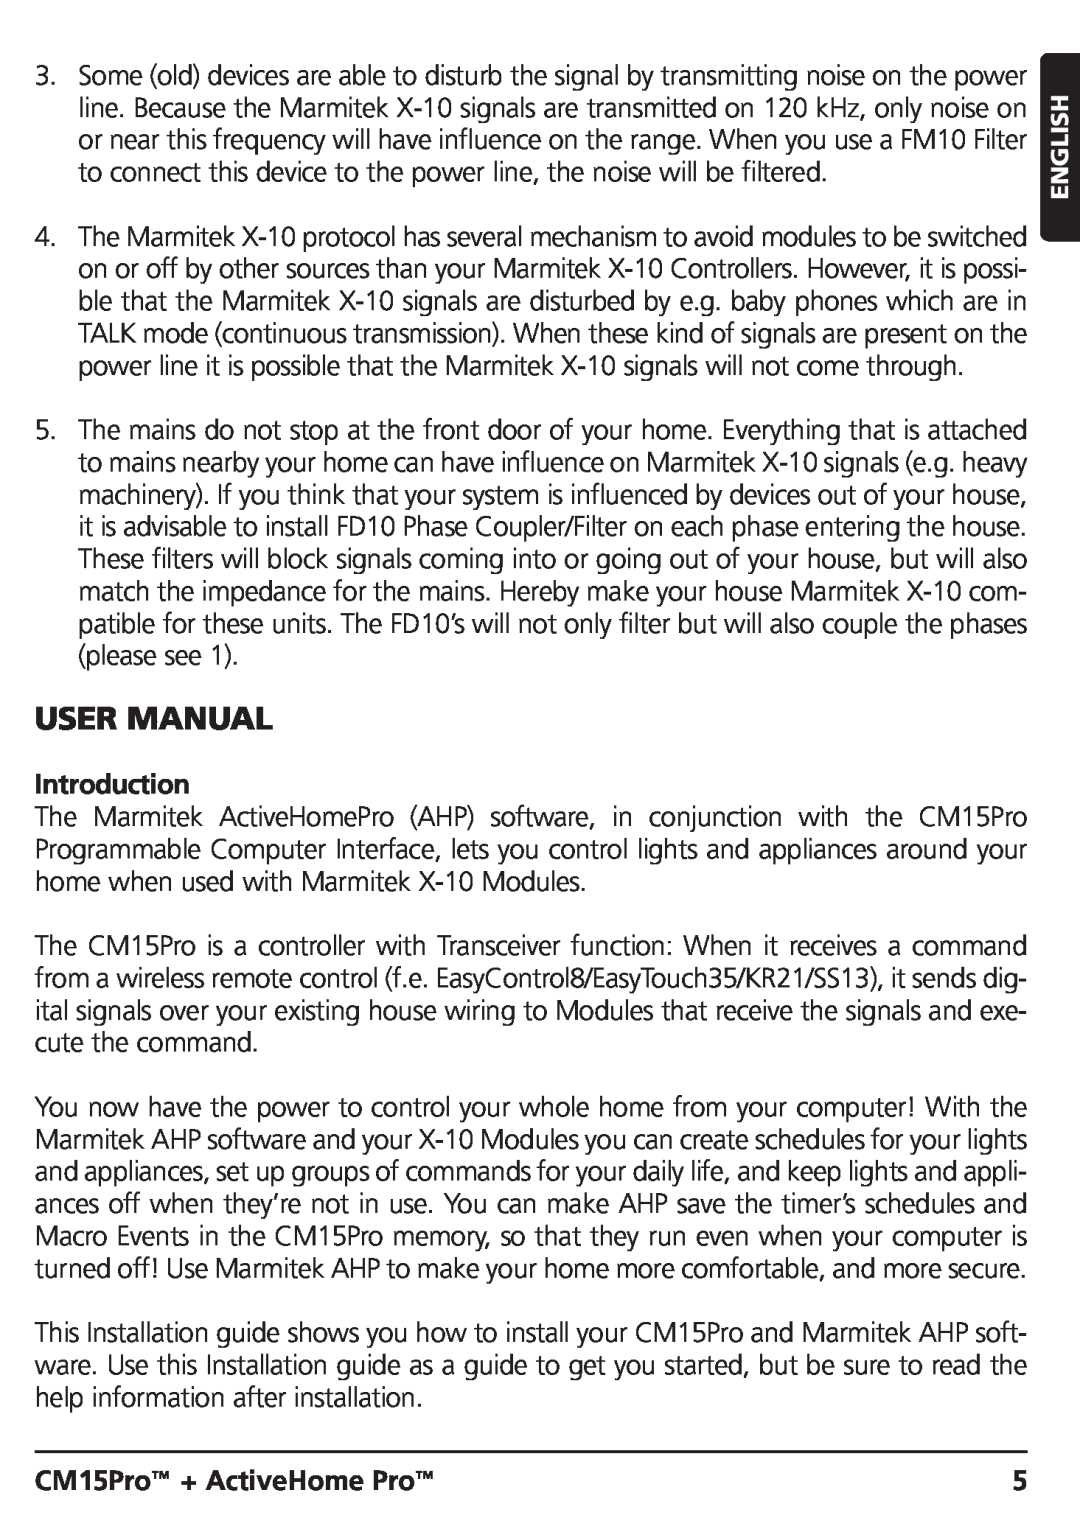 Marmitek CM15PRO manual User Manual, Introduction, CM15Pro + ActiveHome Pro 